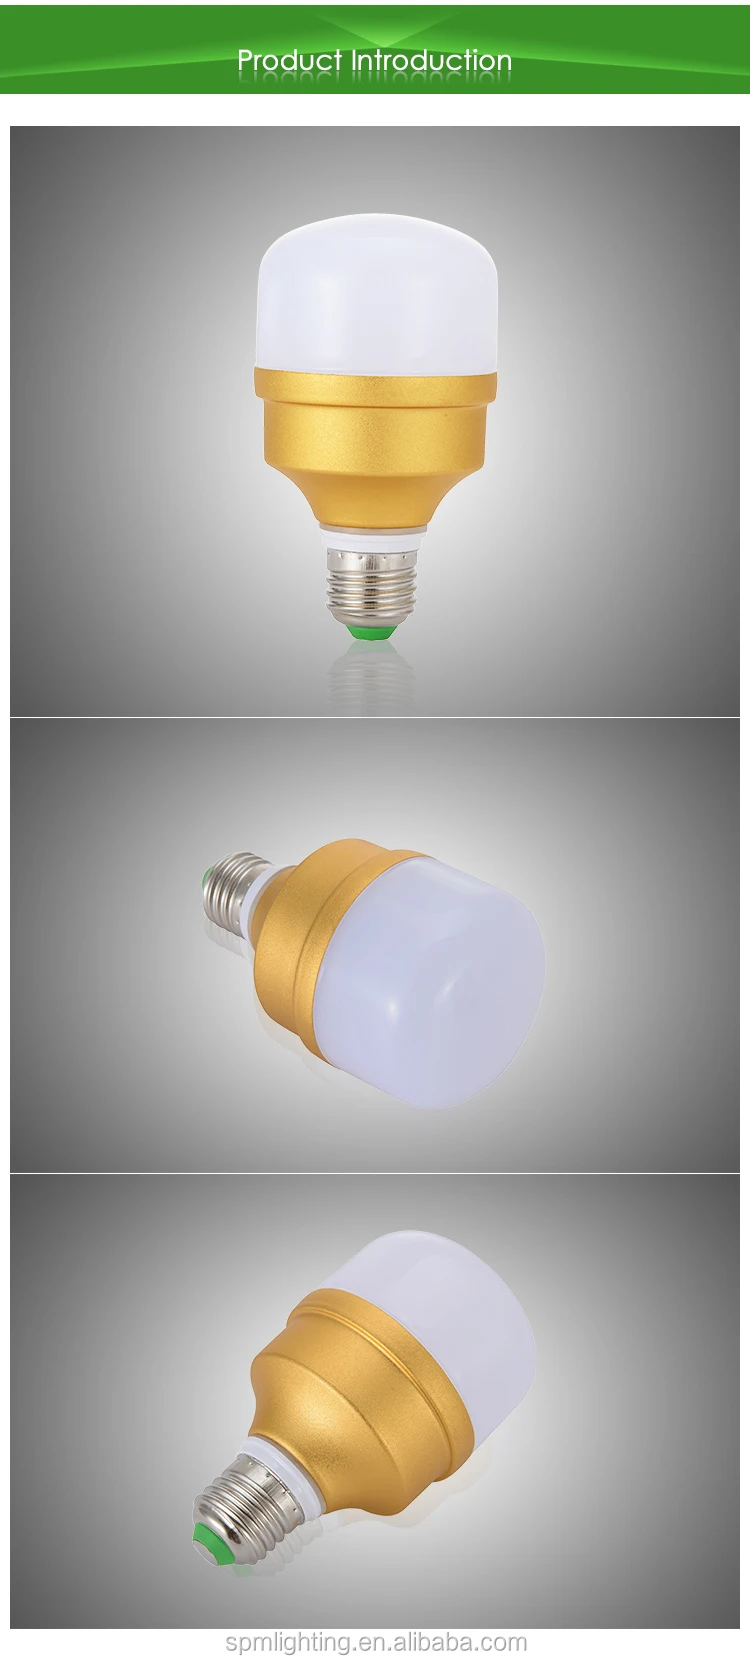 China led Cheap price e27 5w high watt led spm lighting bulb